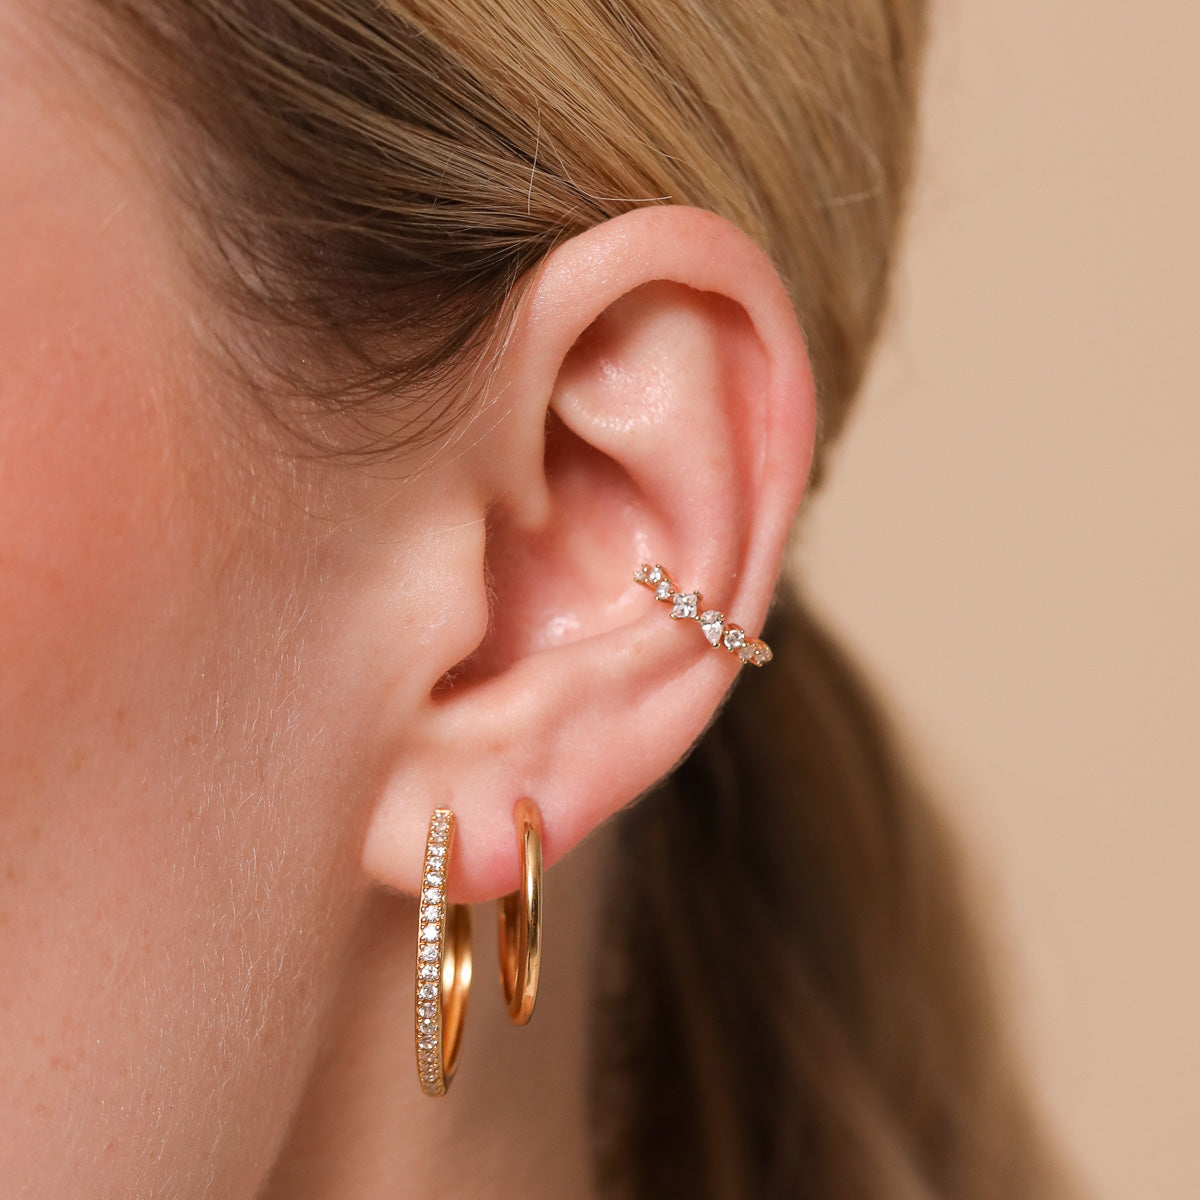 Ear Cuffs in Gold, Silver & Rose Gold | Astrid & Miyu Jewelry